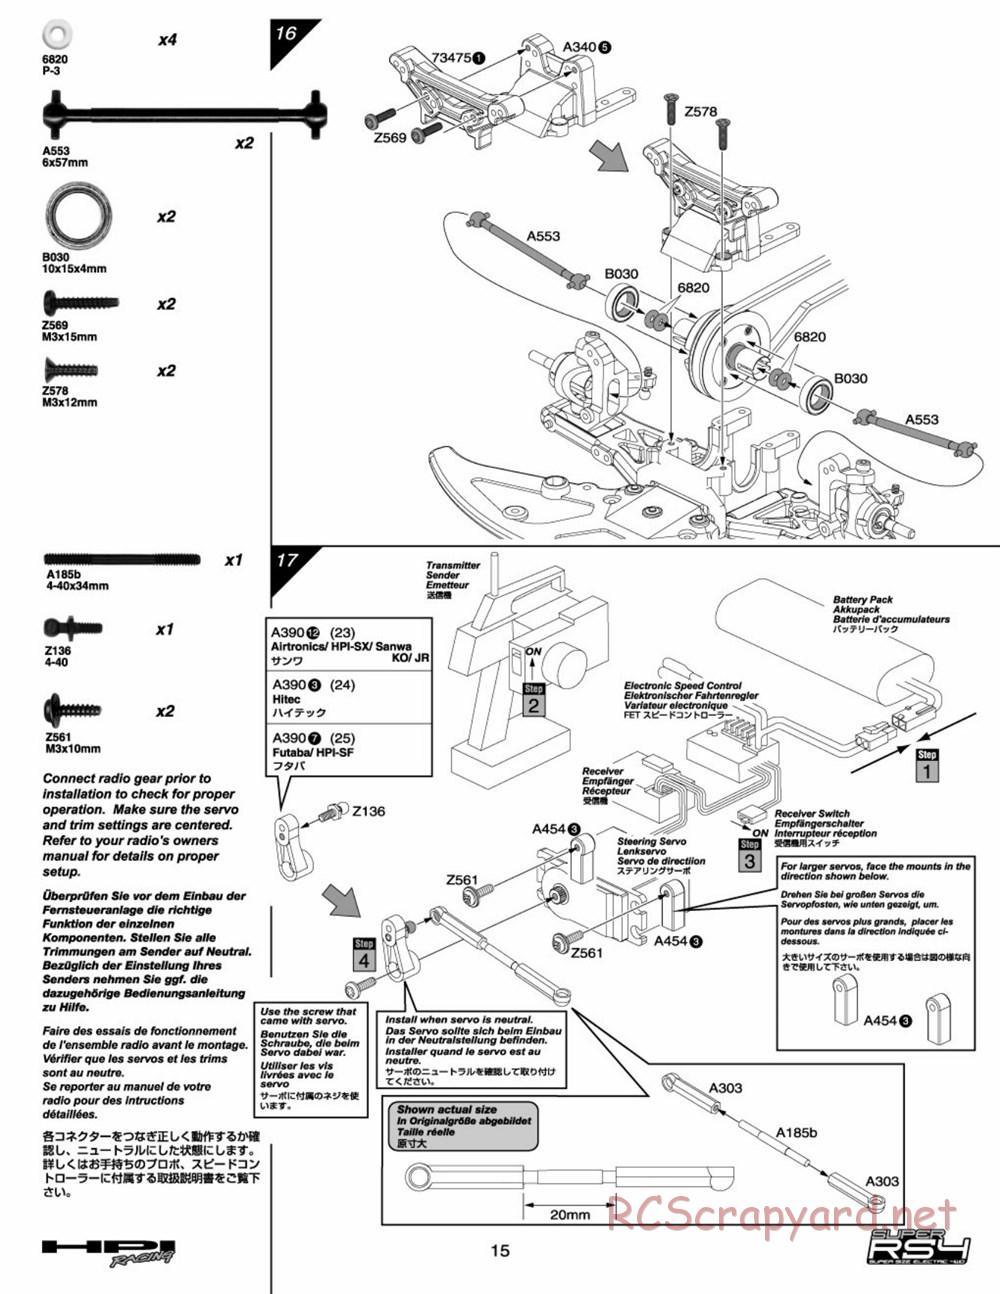 HPI - Super RS4 - Manual - Page 14